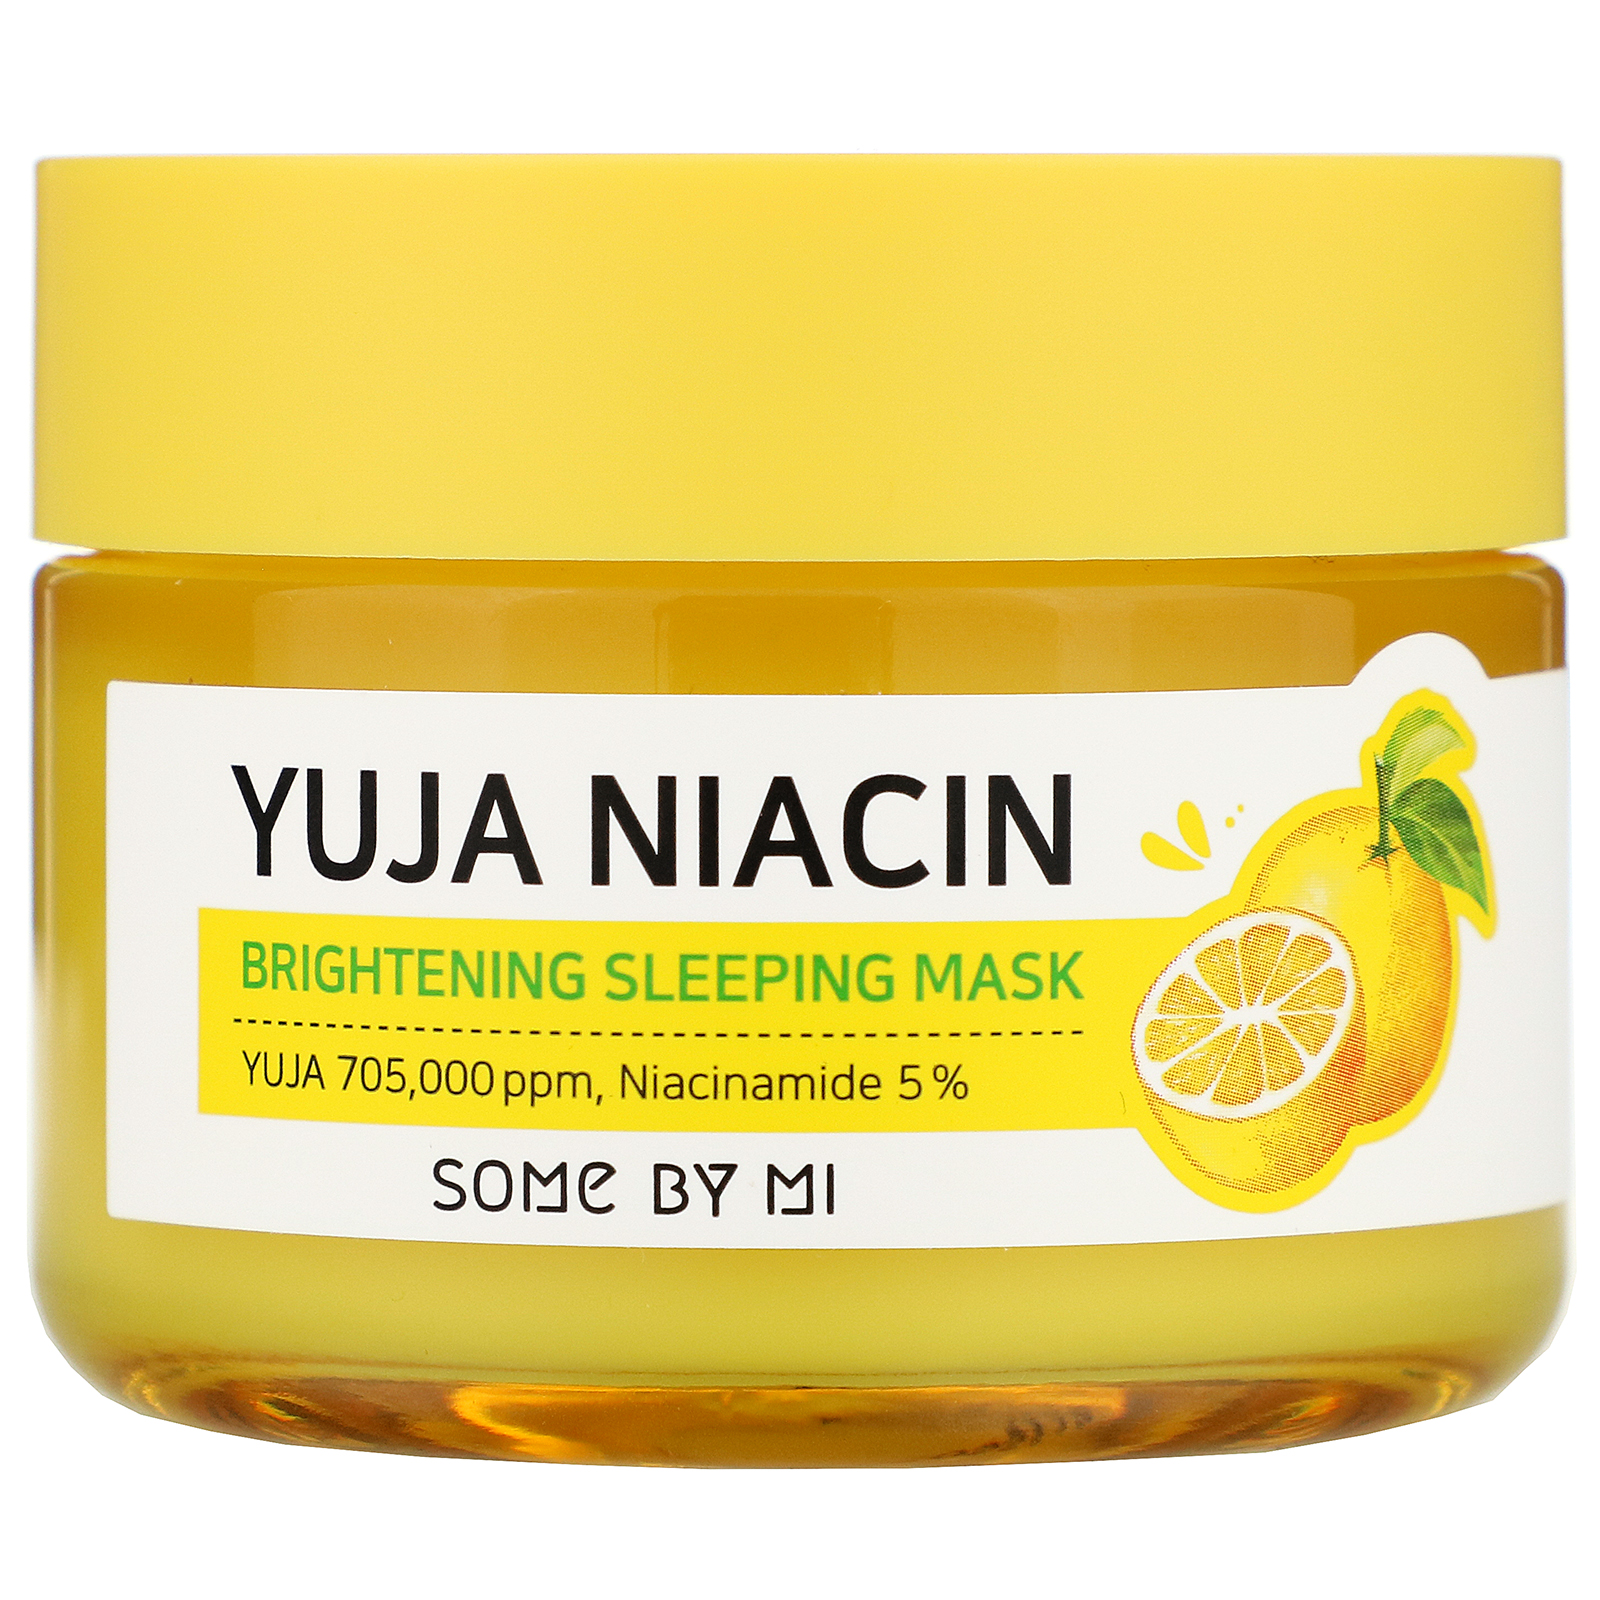 Some By Mi, Yuja Niacin, Brightening Sleeping Mask, 2.11 ...